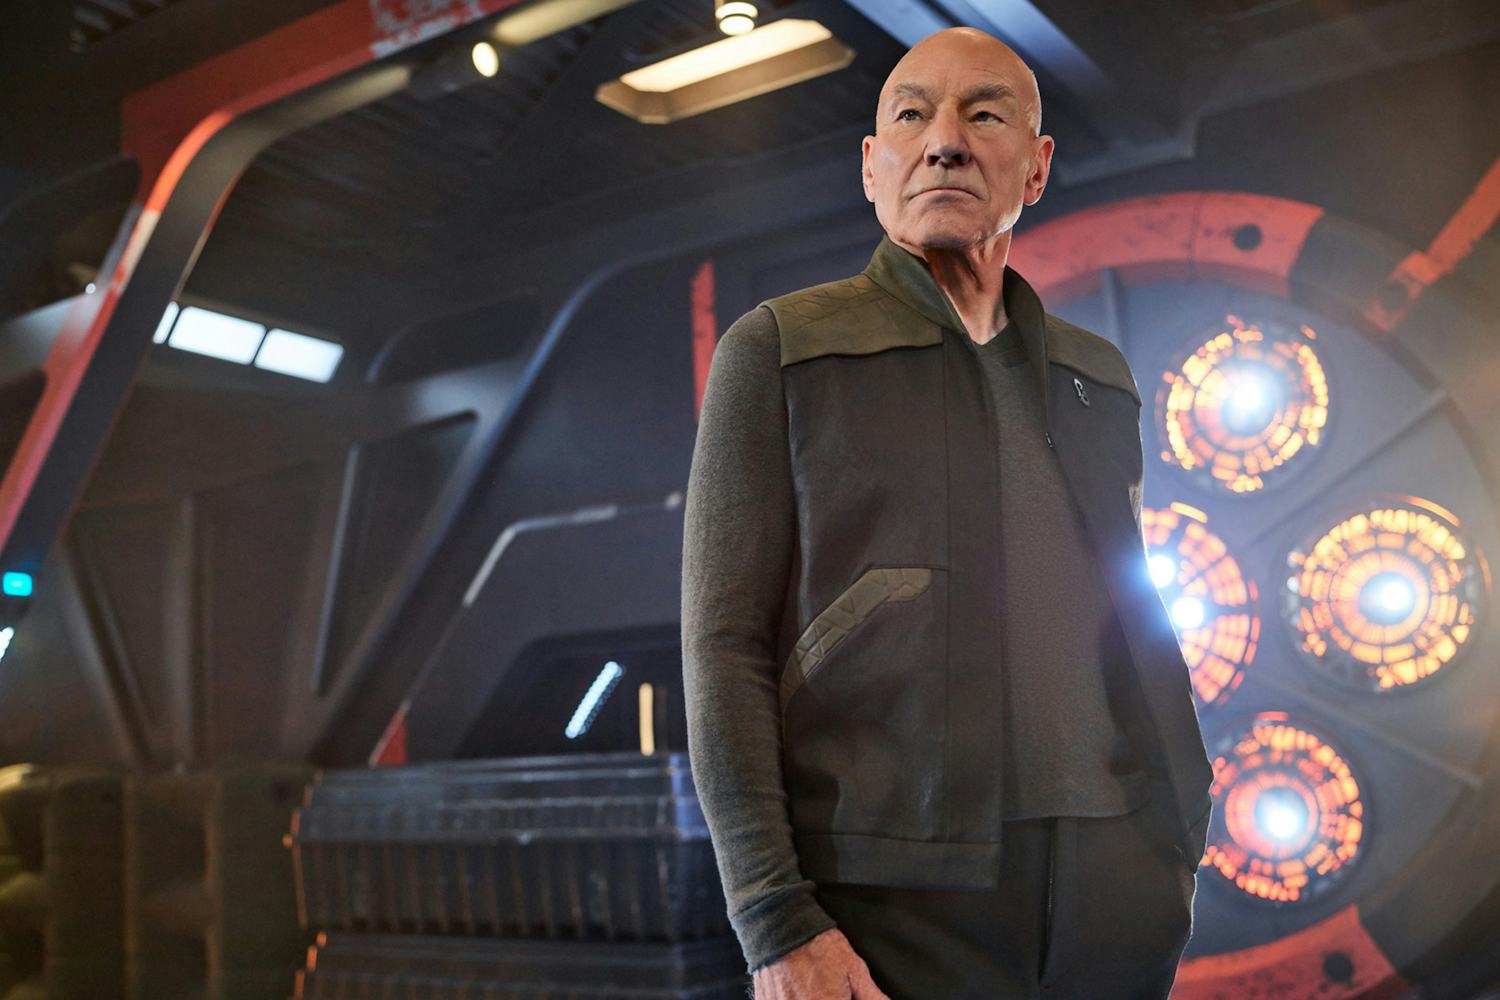 'Picard' Season 2 teaser trailer reveals a Star Trek icon’s shocking return